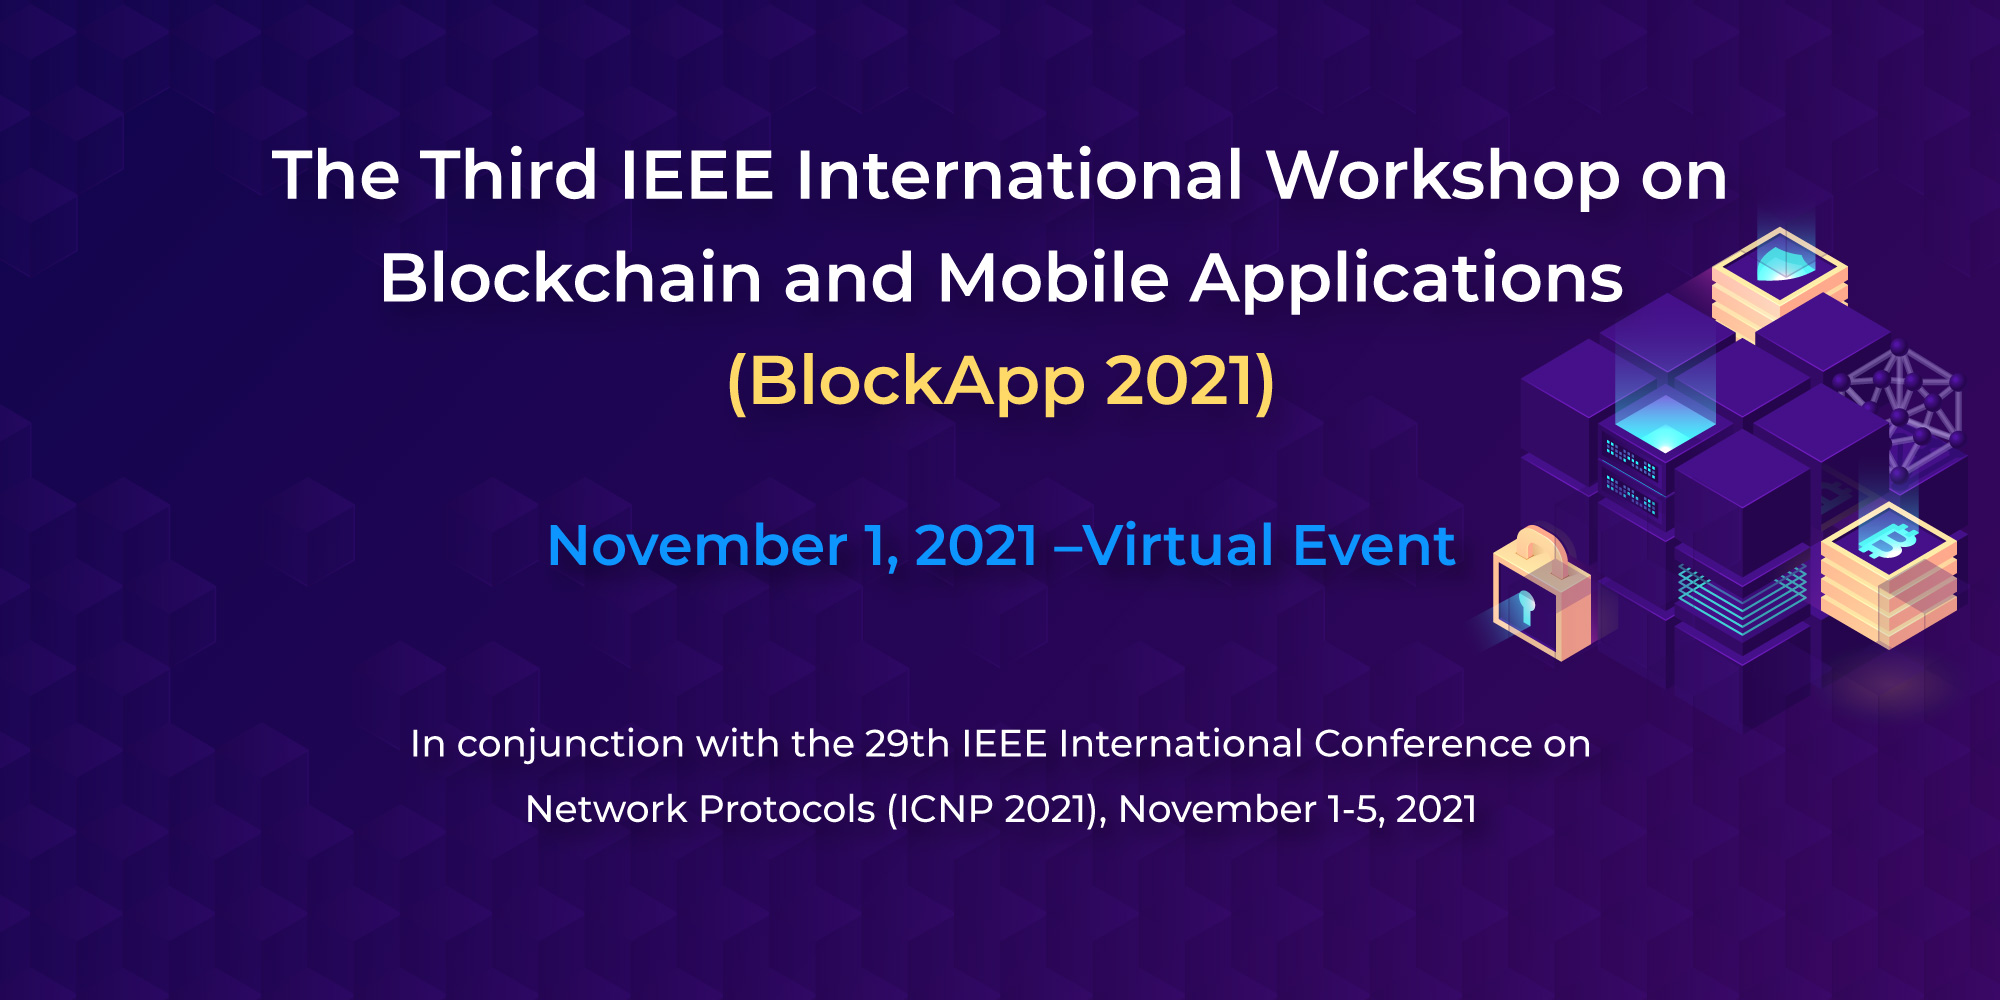 The Third IEEE International Workshop on Blockchain and Mobile Applications (BlockApp 2021)